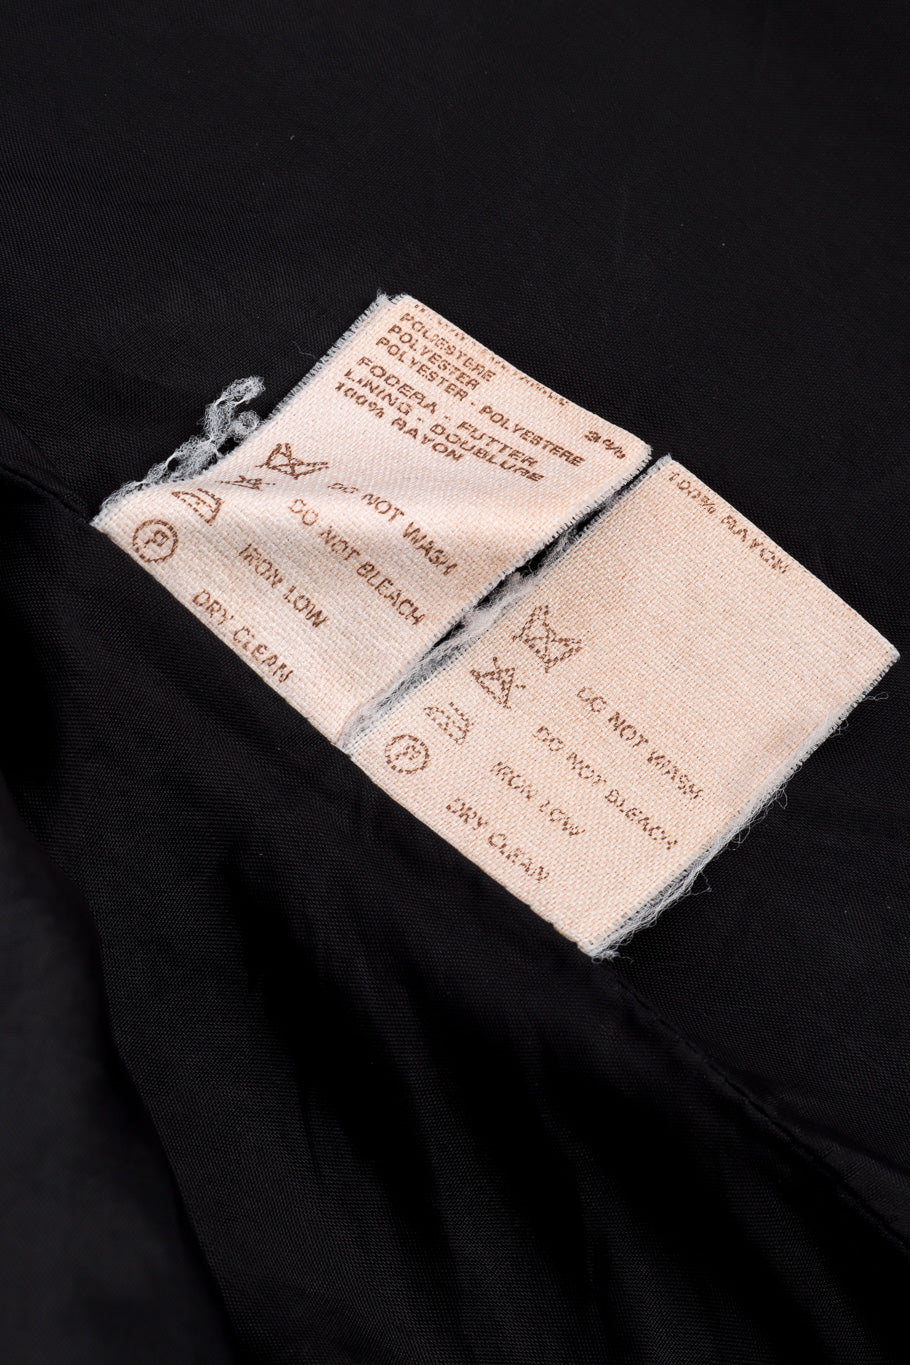 Vintage Gianfranco Ferre Woven Jacquard and Velvet Jacket content labels @recessla